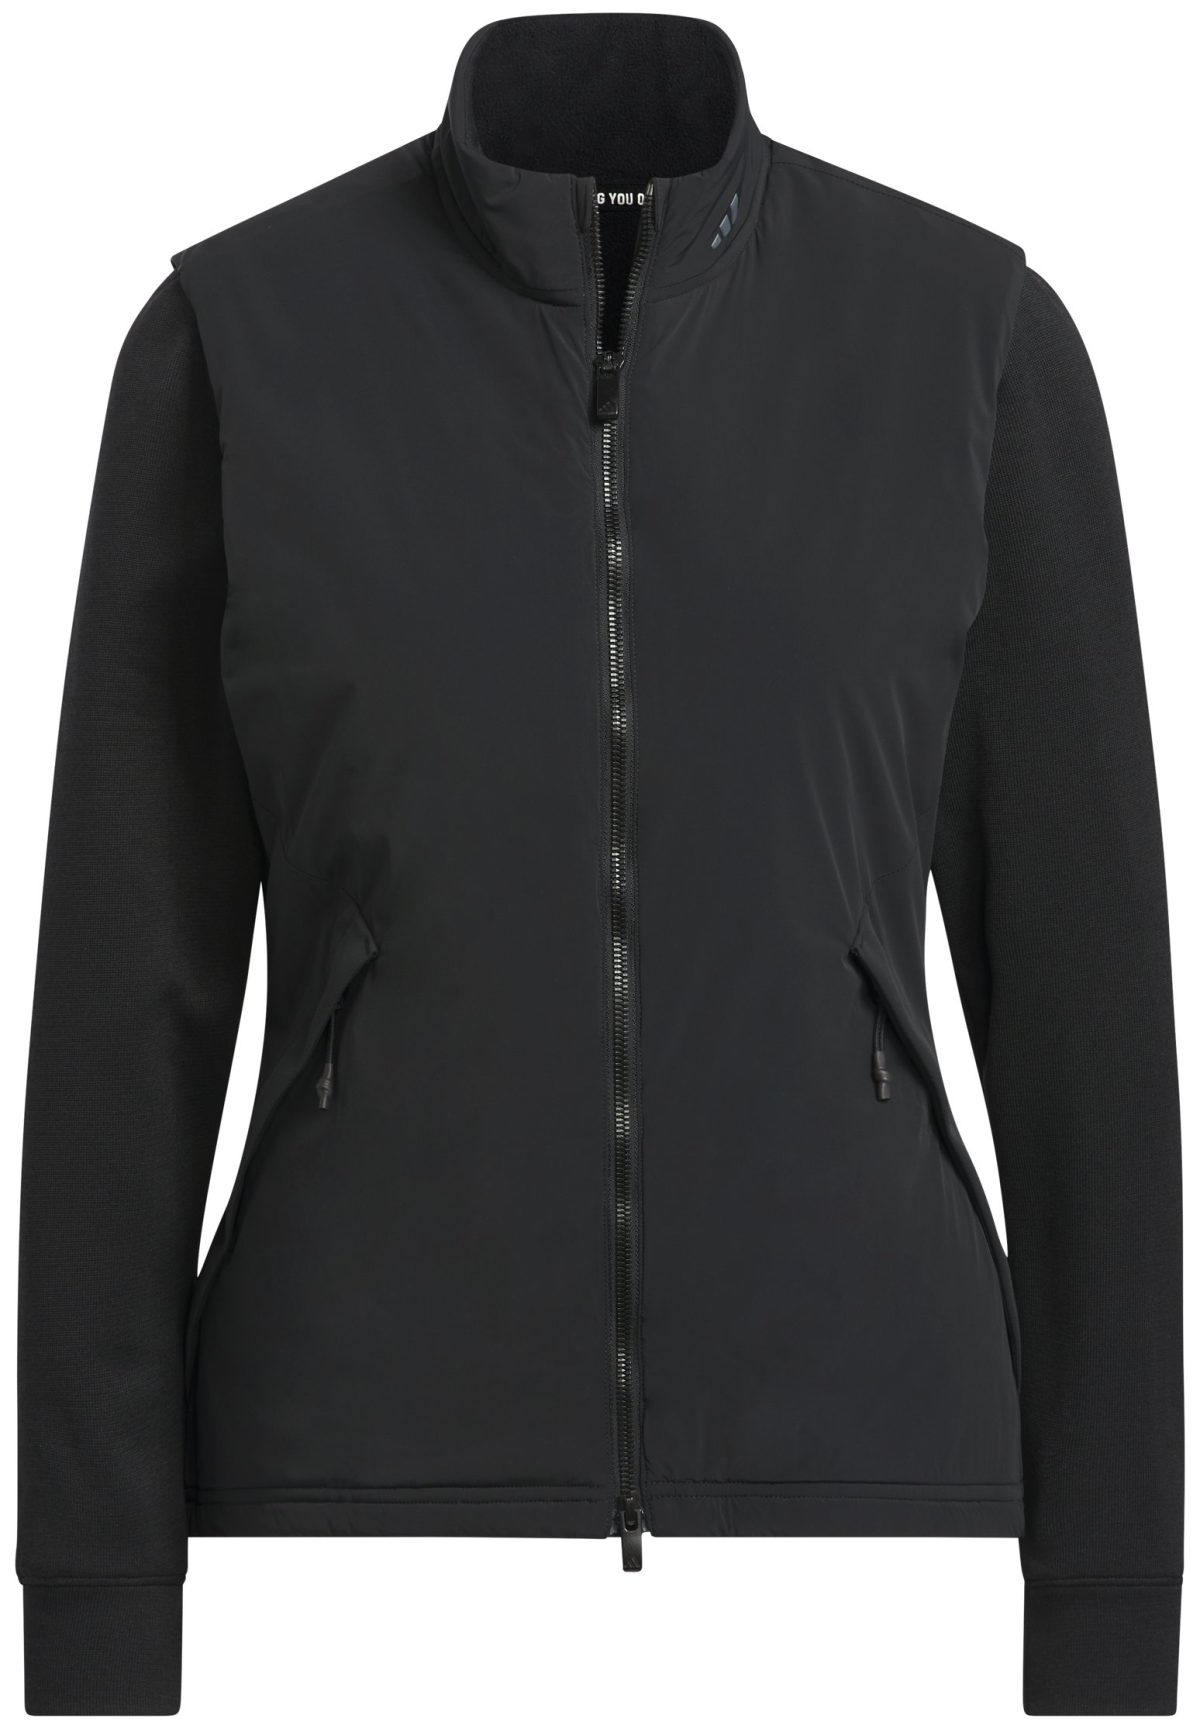 adidas Women's Ultimate365 Tour Frostguard Golf Jacket, Nylon/Polyester/Elastane in Black, Size XS